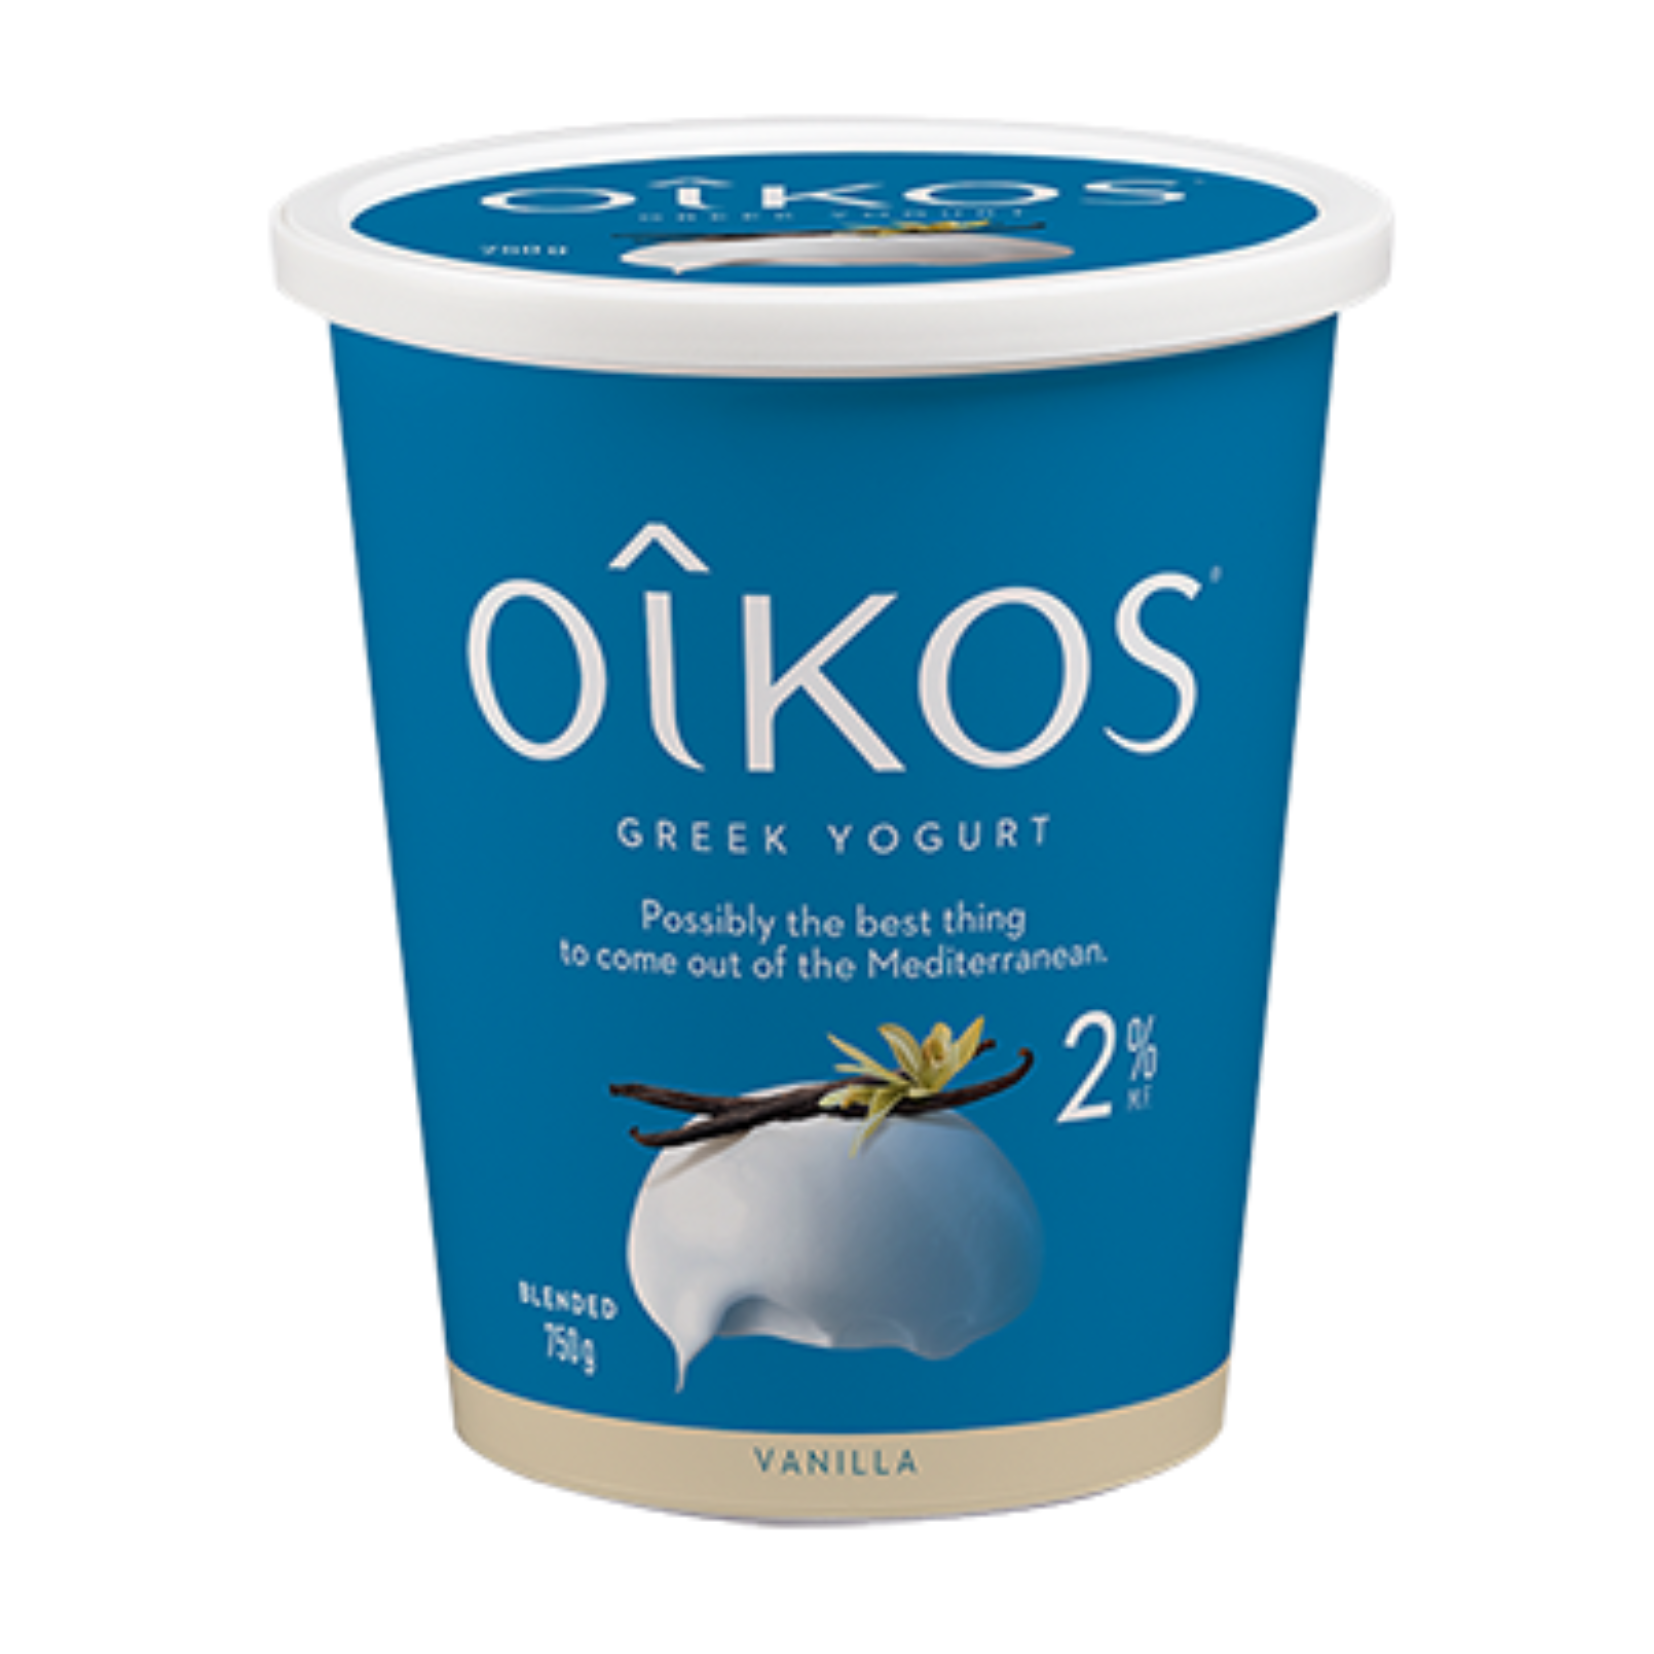 Oikos 2% Vanilla Greek Yogurt 850g